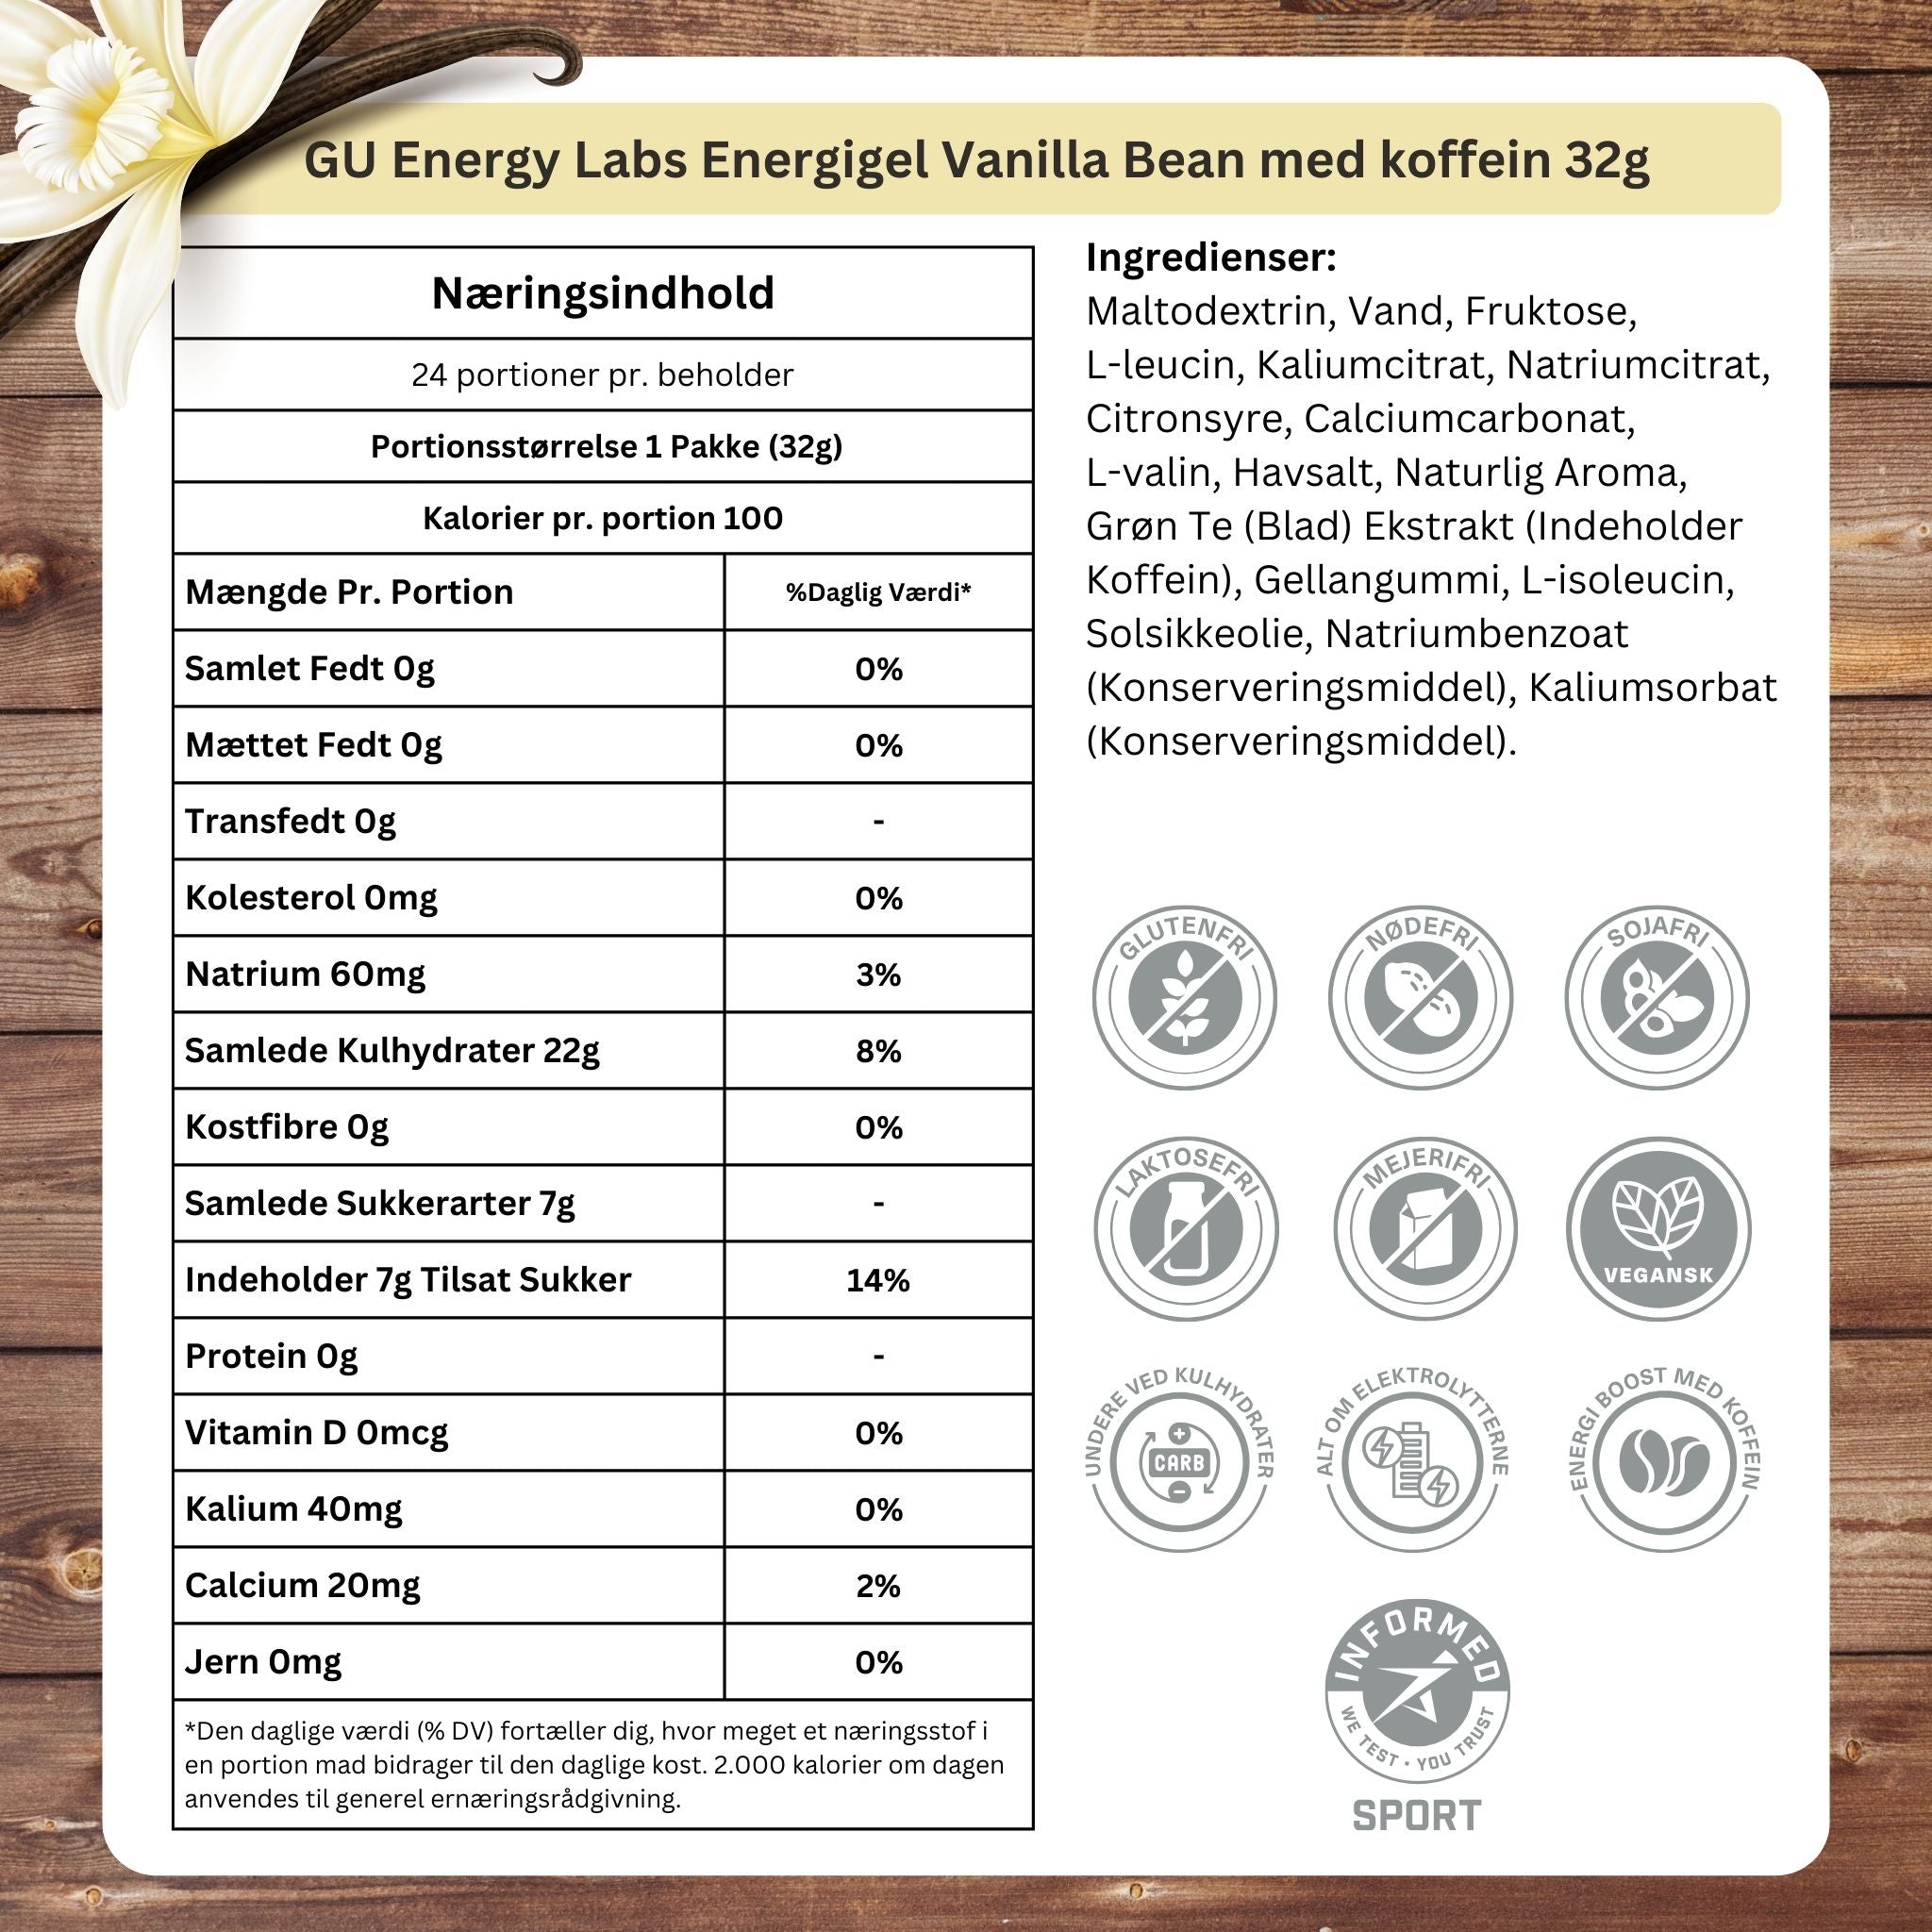 GU Energy Energigel Vanilla Bean med Koffein (32g)